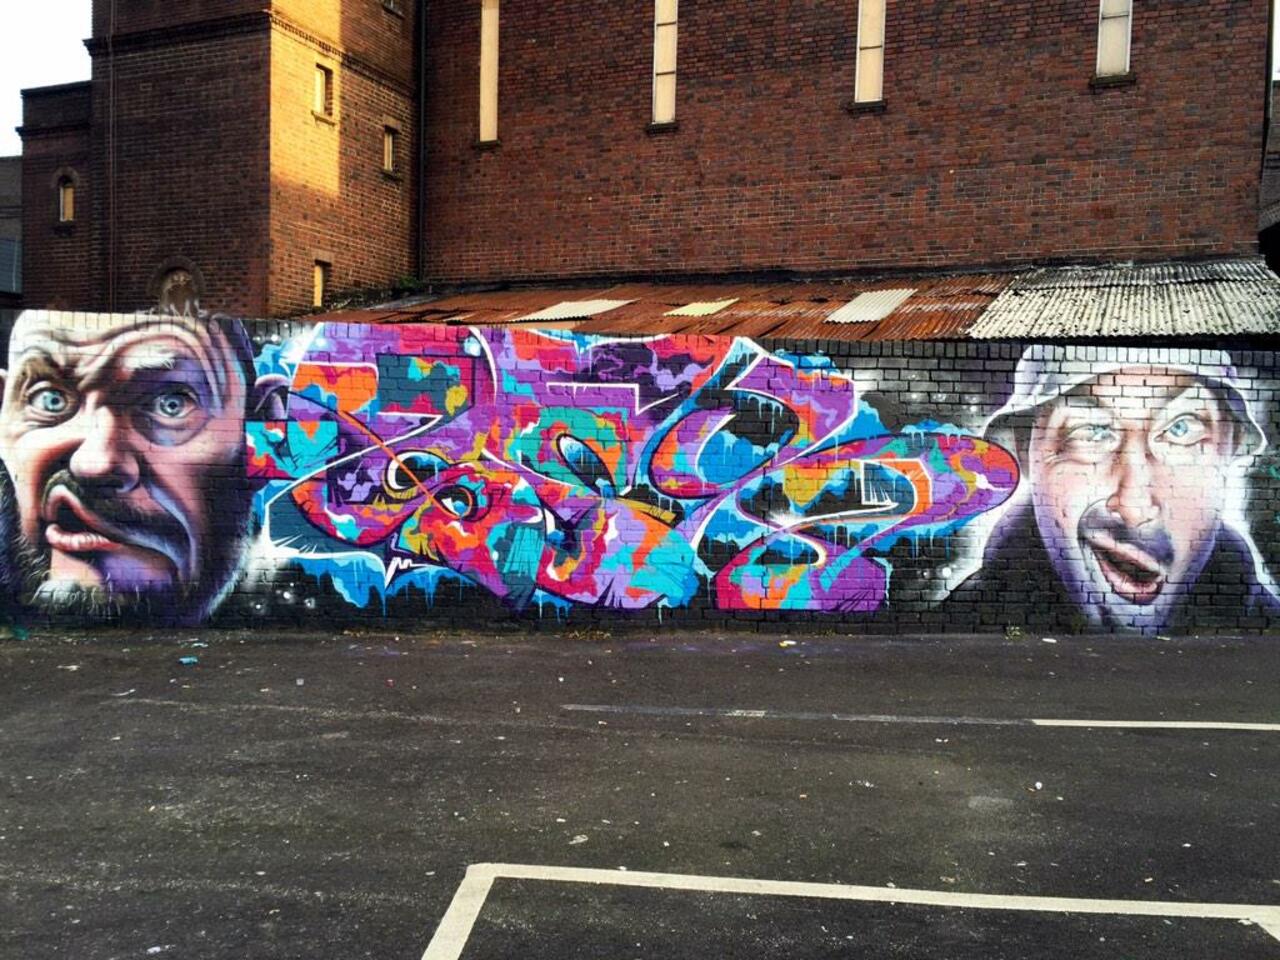 RT @djcolatron: Amazing new wall from Title and Mef in #Digbeth #Birmingham : #streetart #graffiti #portrait #mural  http://t.co/T38ZGjm3iy